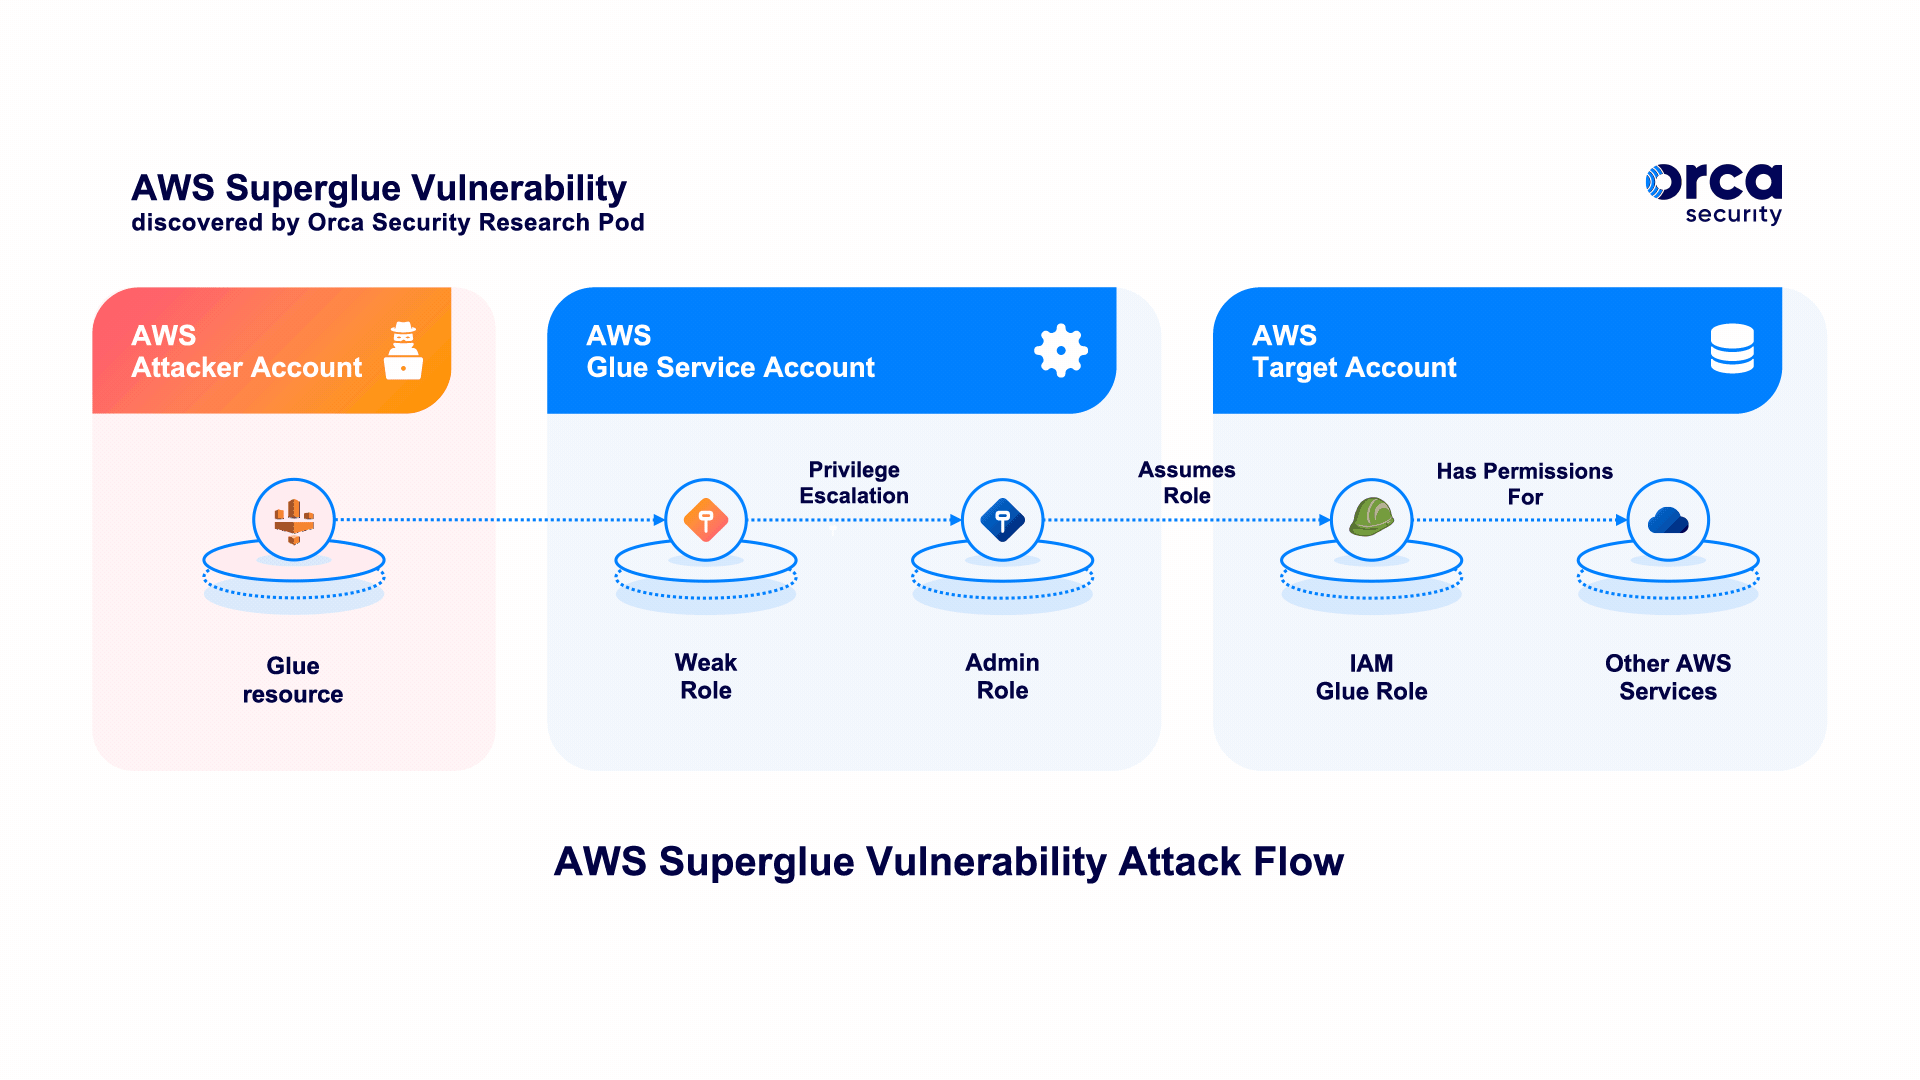 AWS Superglue Vulnerability Attack Flow